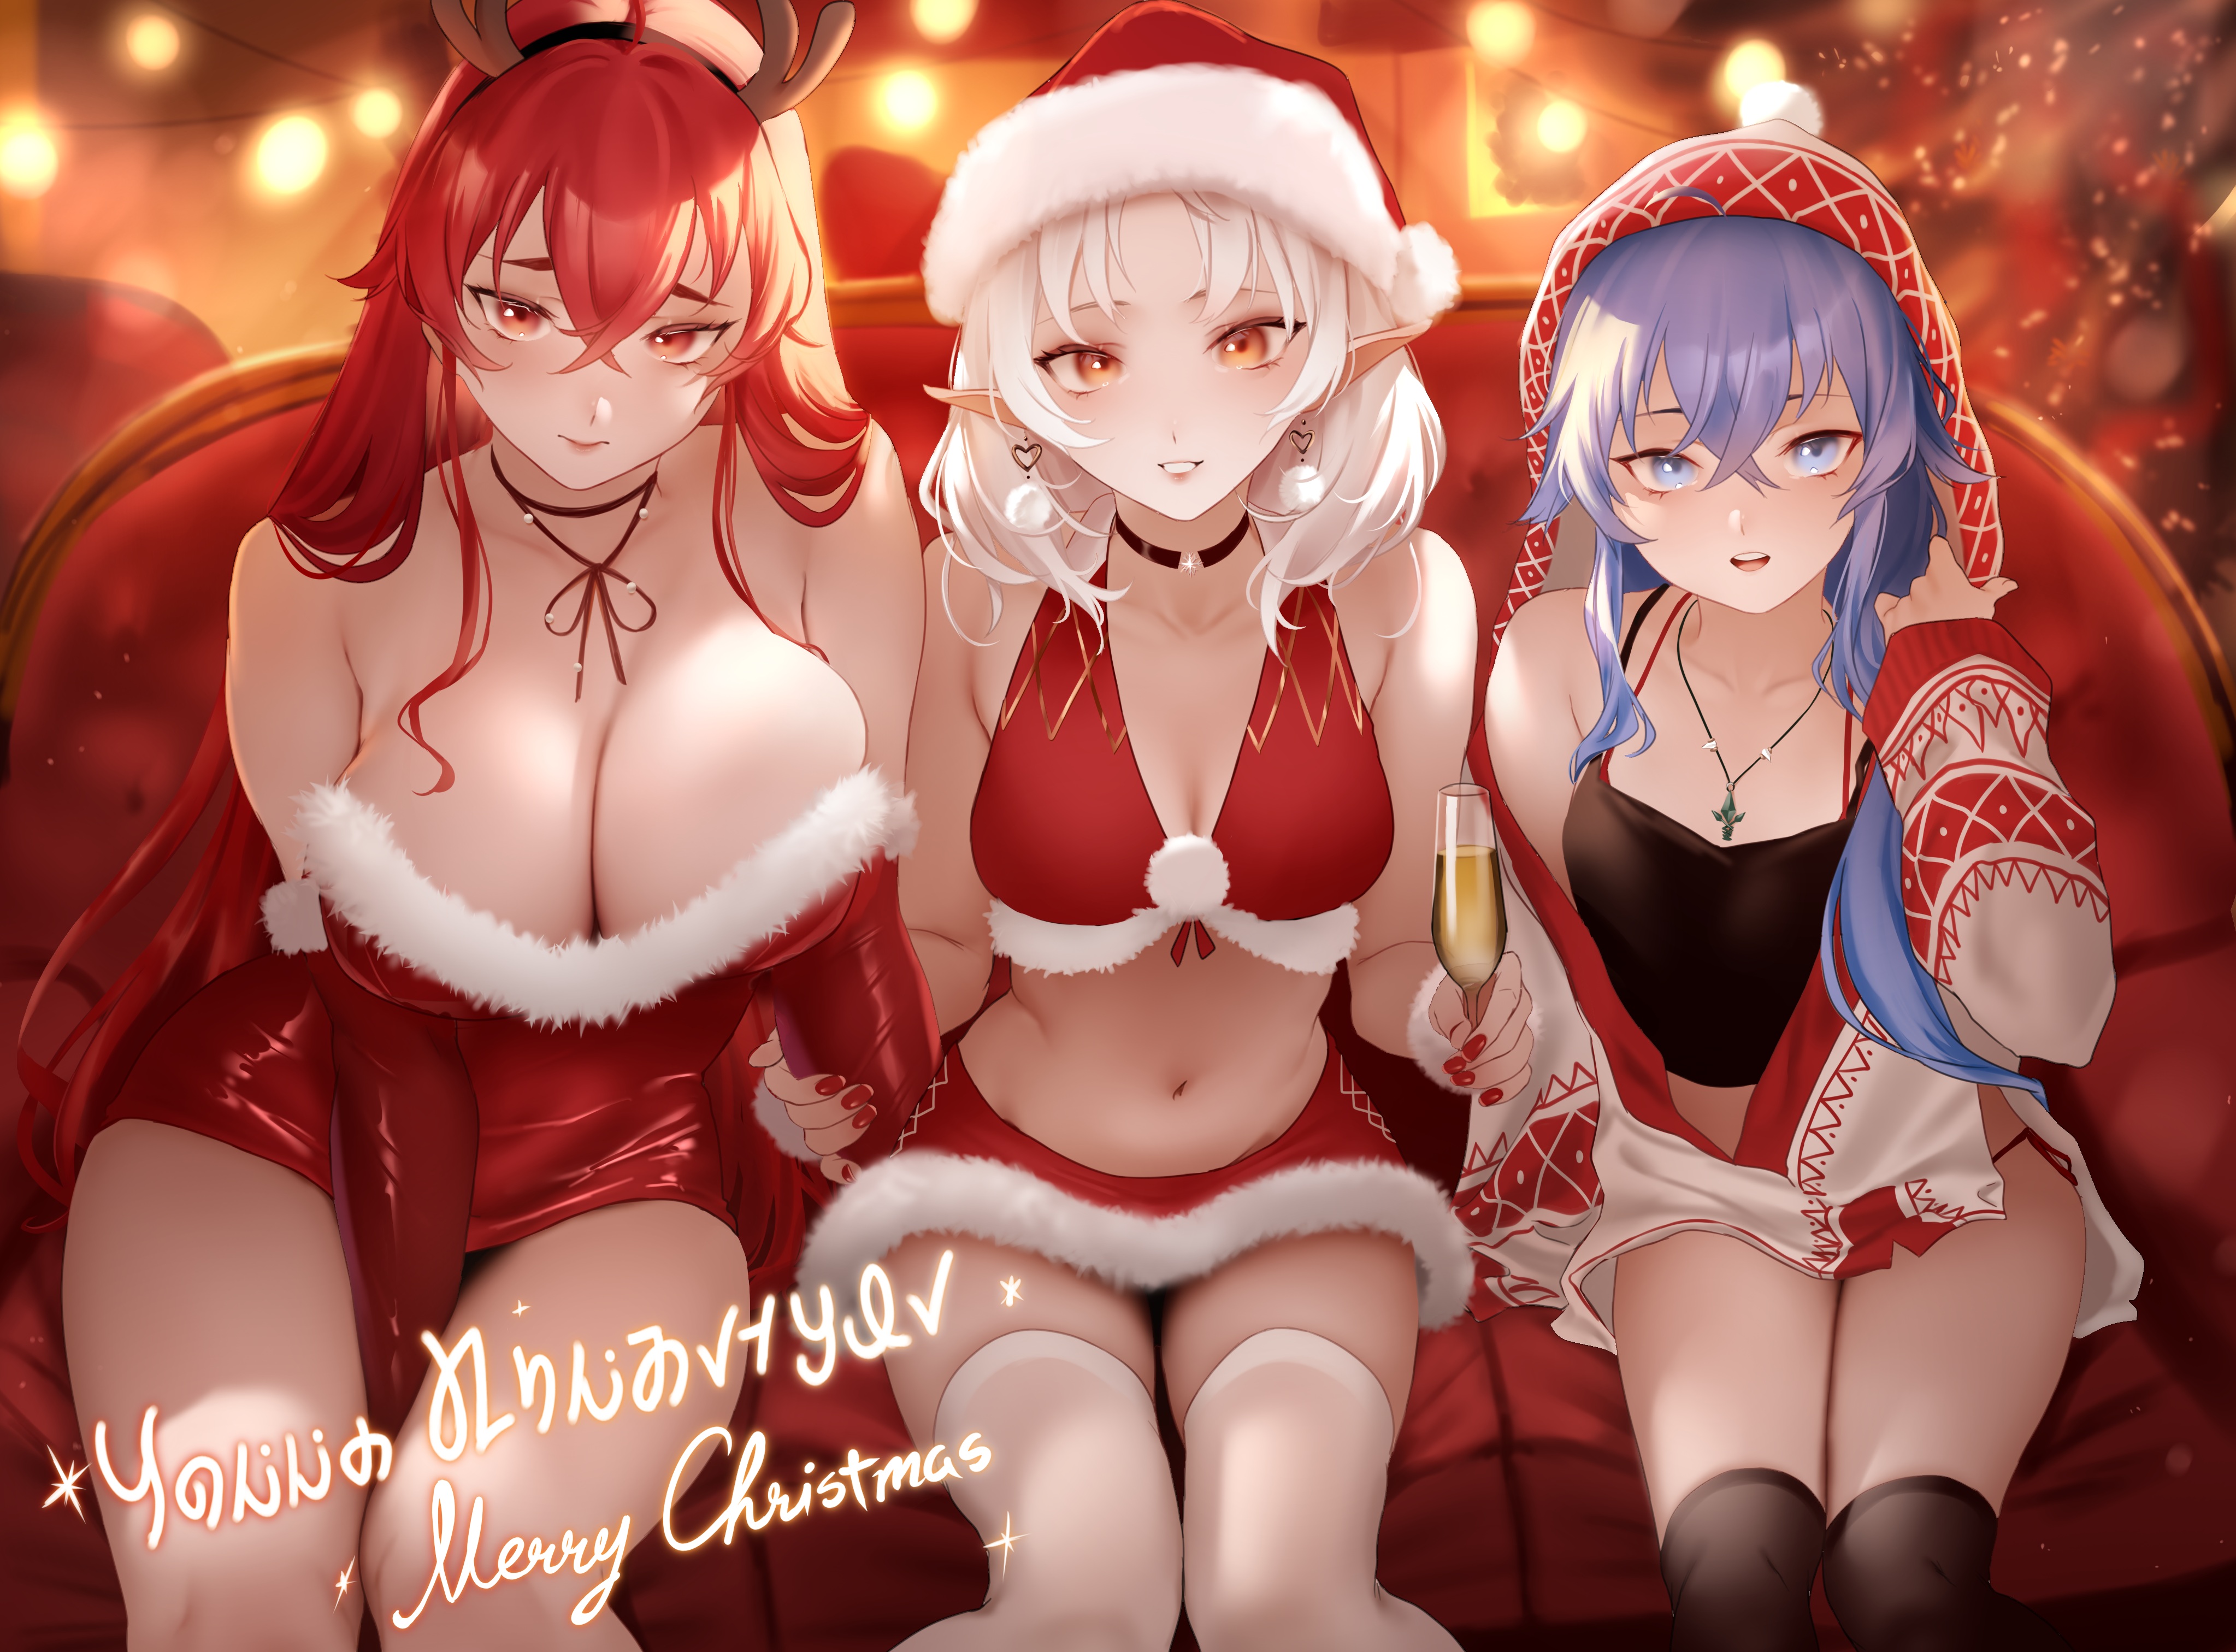 Anime 4093x3024 anime anime girls Christmas clothes cleavage Christmas big boobs Santa hats champagne choker necklace women trio couch text Pixie Mushoku Tensei Eris Boreas Greyrat (Mushoku Tensei) Roxy Migurdia (Mushoku Tensei) Sylphiette